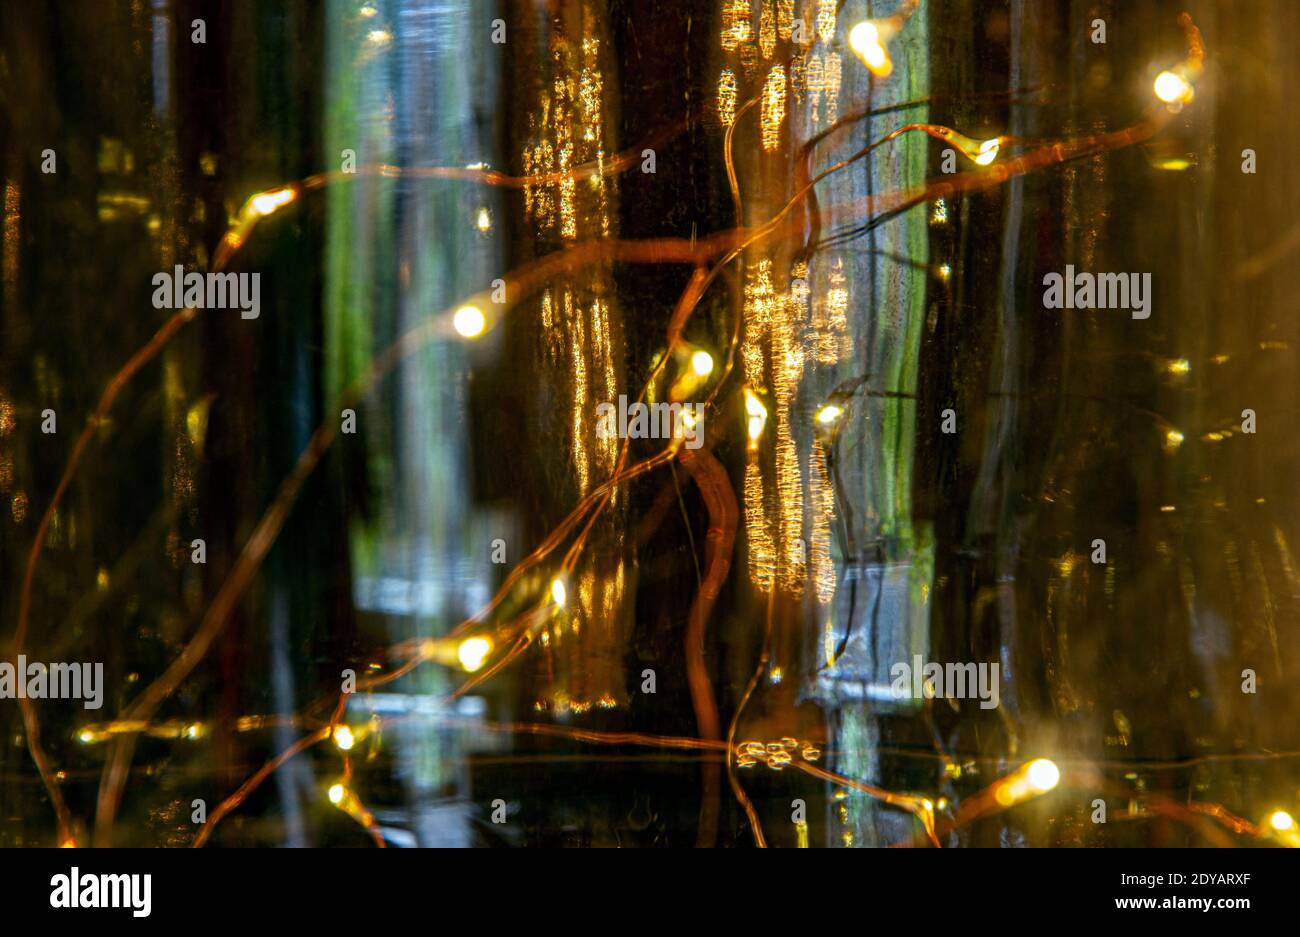 LED lighting in wine flagon Stock Photo